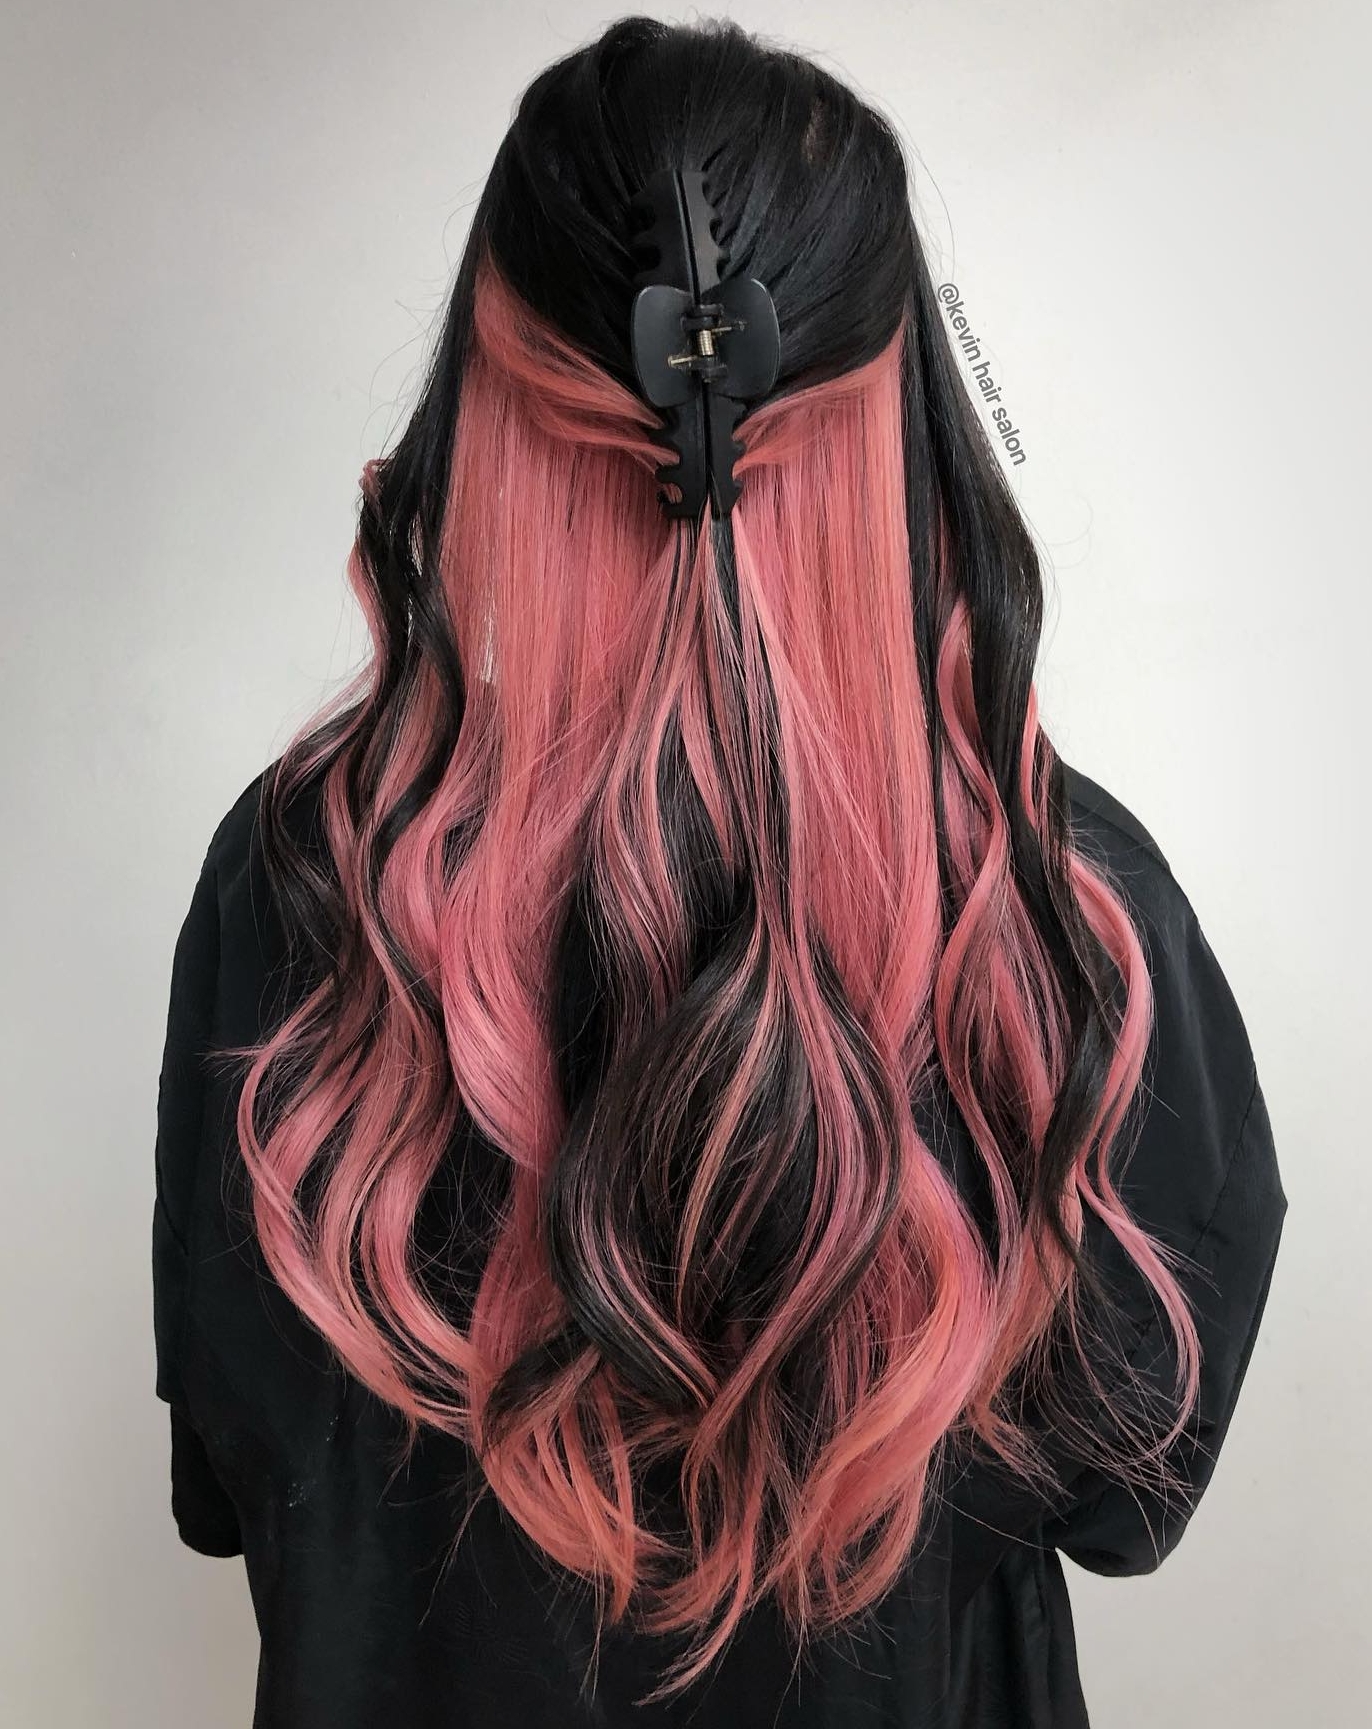 Black Hair with Pink Underneath